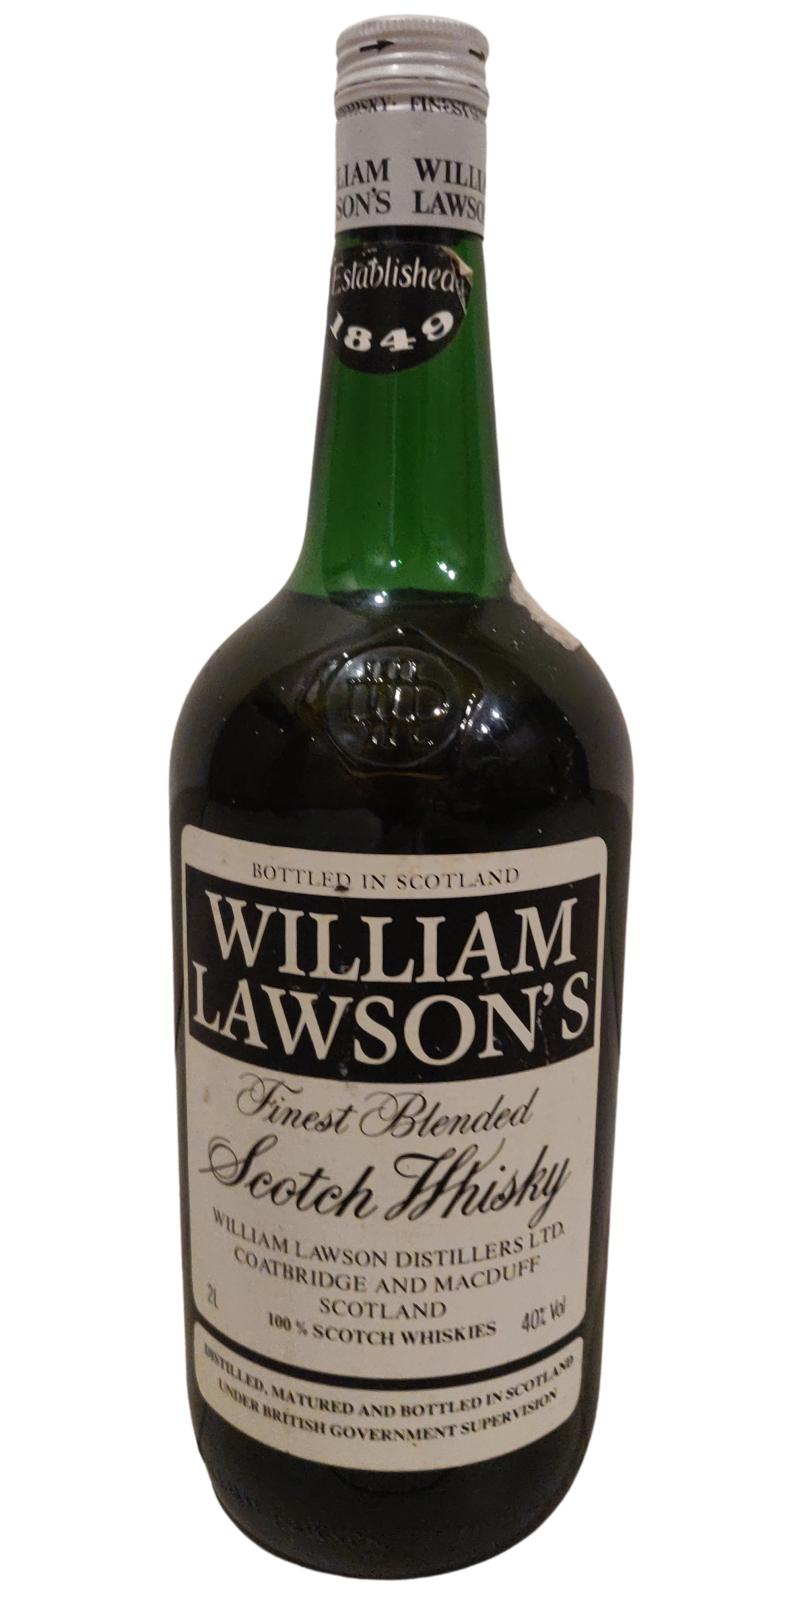 William Lawson's. Красная этикетка на виски William Lawson's. Высота бутылки William Lawson's. Lliam Lawson’s Finest Blend. William lawson 0.5